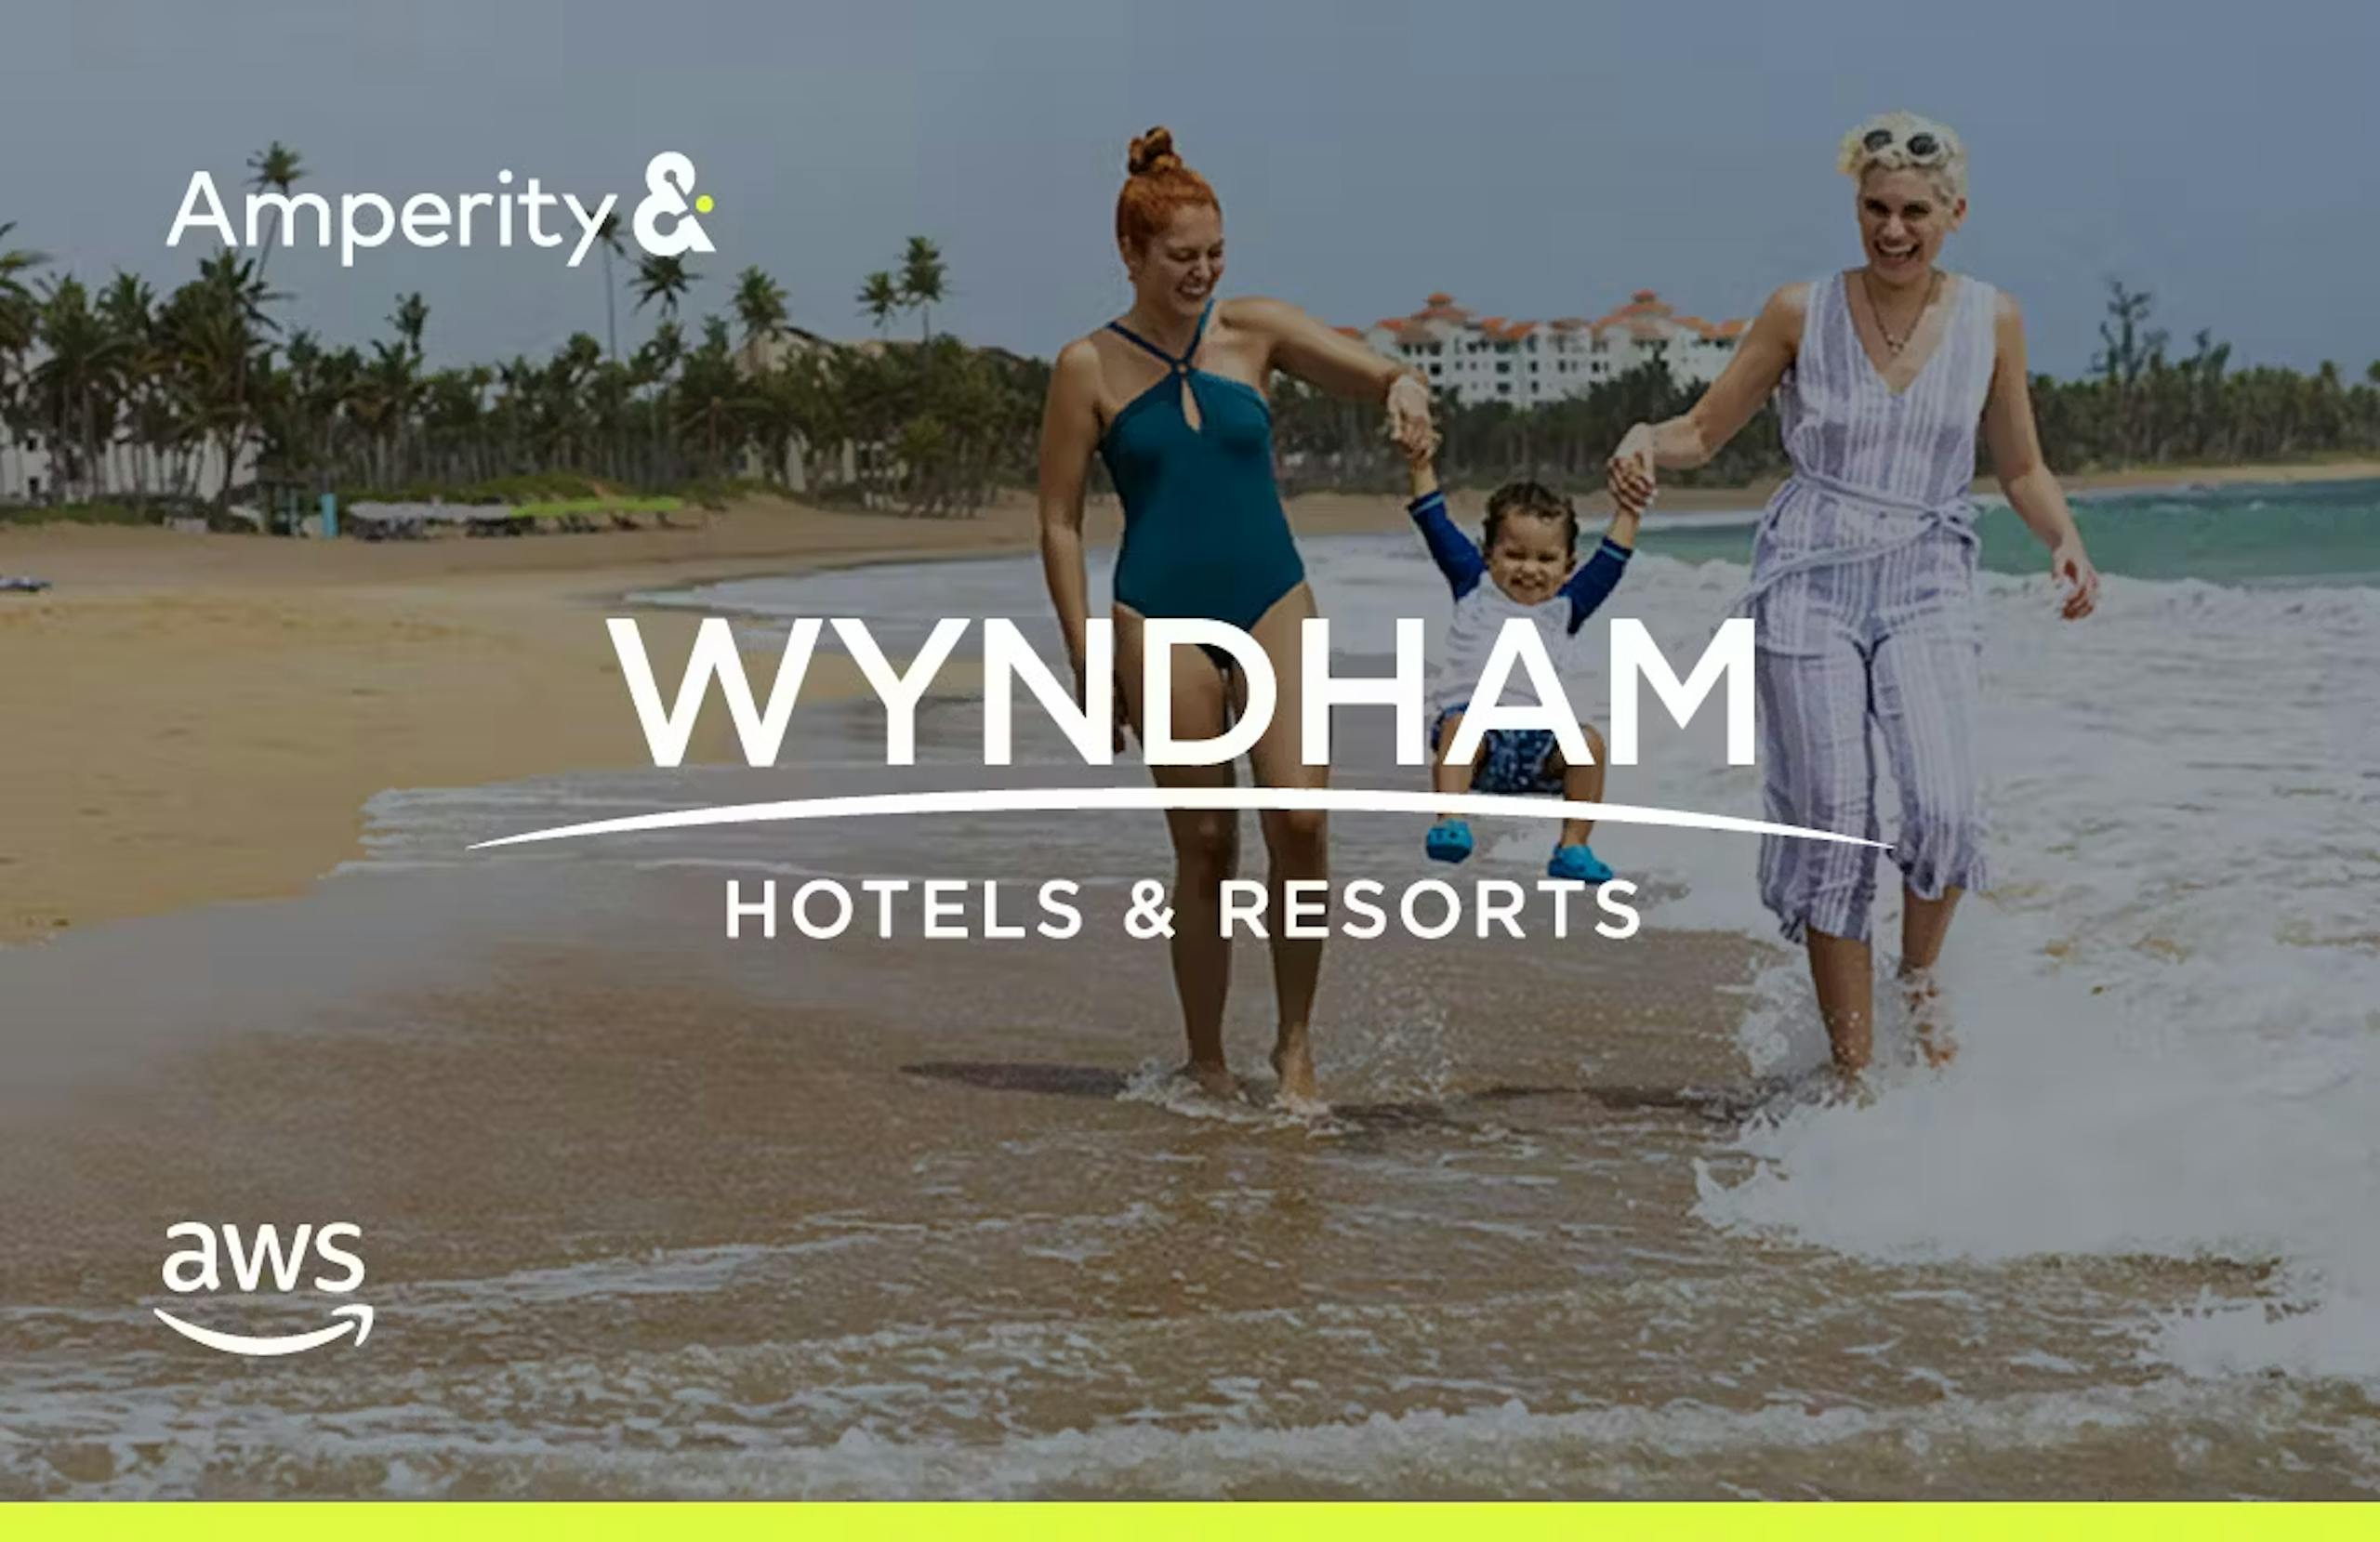 Amperity & AWS Case Study: Wyndham Hotels & Resorts